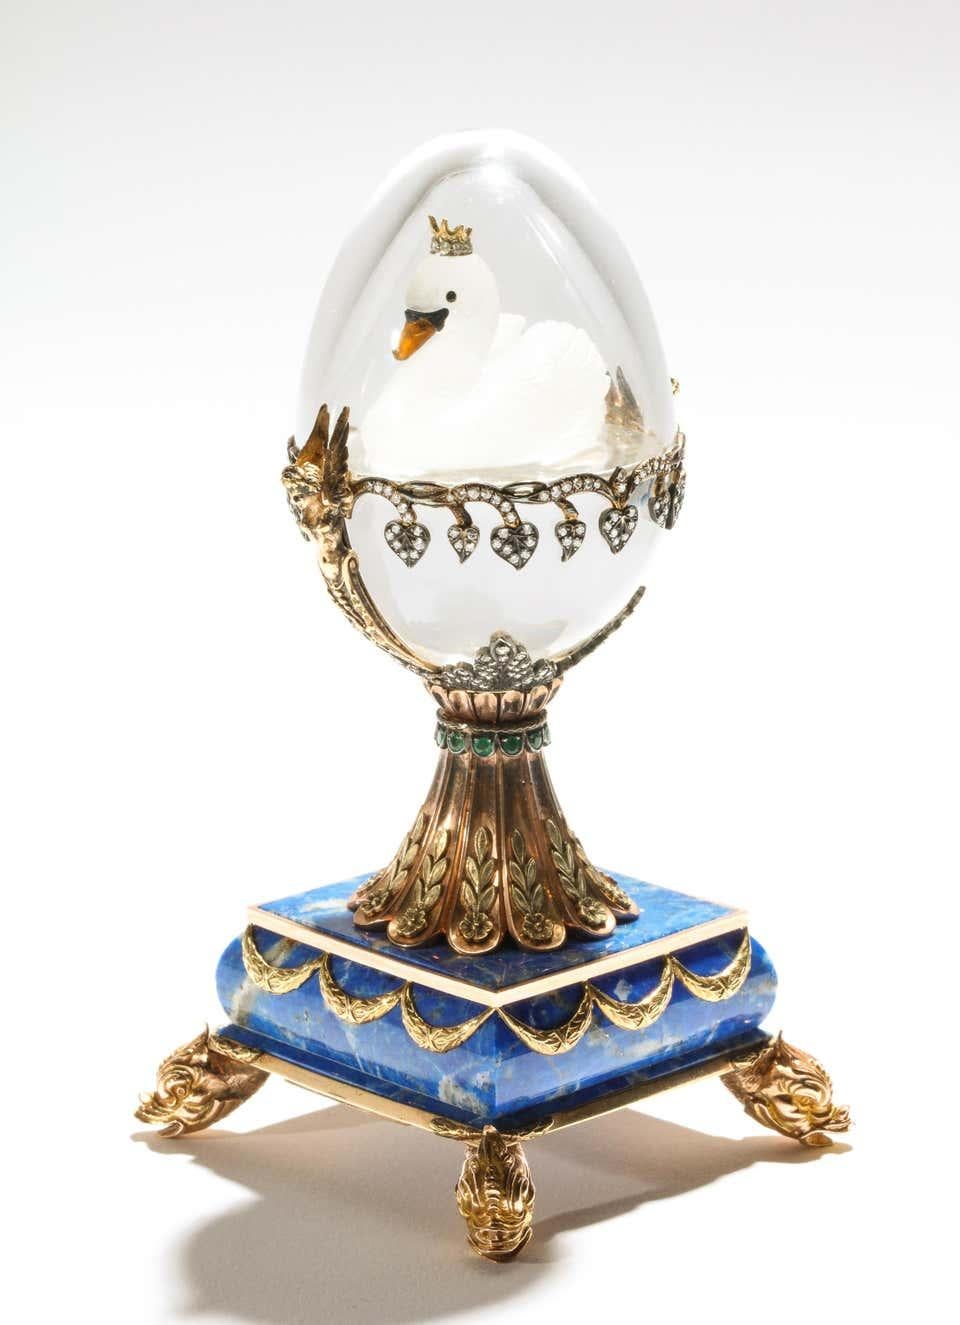 Women's or Men's Russian 14 Karat Gold, Diamonds, Emeralds, Lapis Lazuli and Glass Egg with Swan